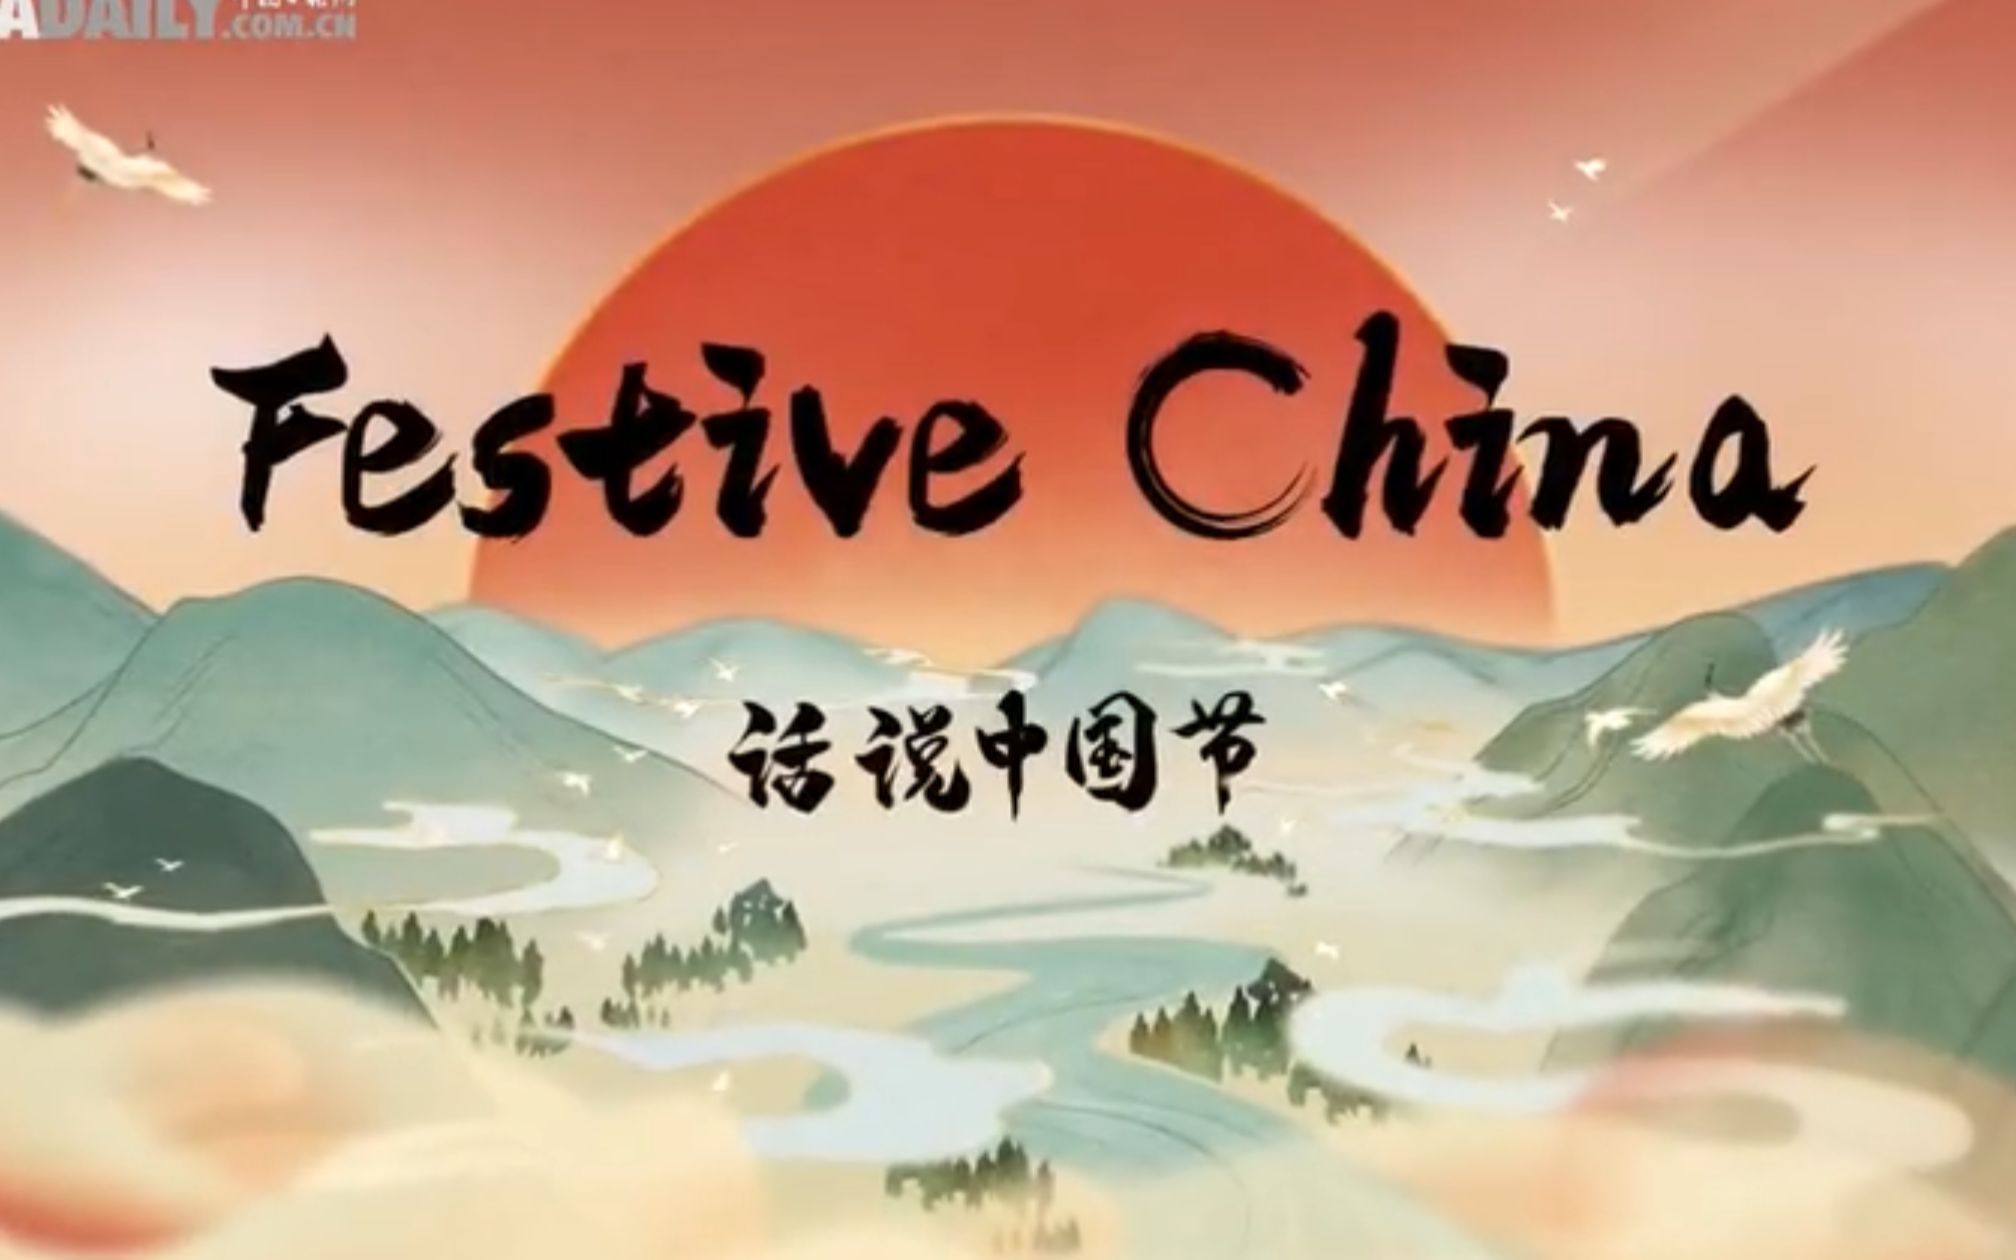 【Festive China / 话说中国节】 第 6 集 - Festive China：Spring Festival（全12集）